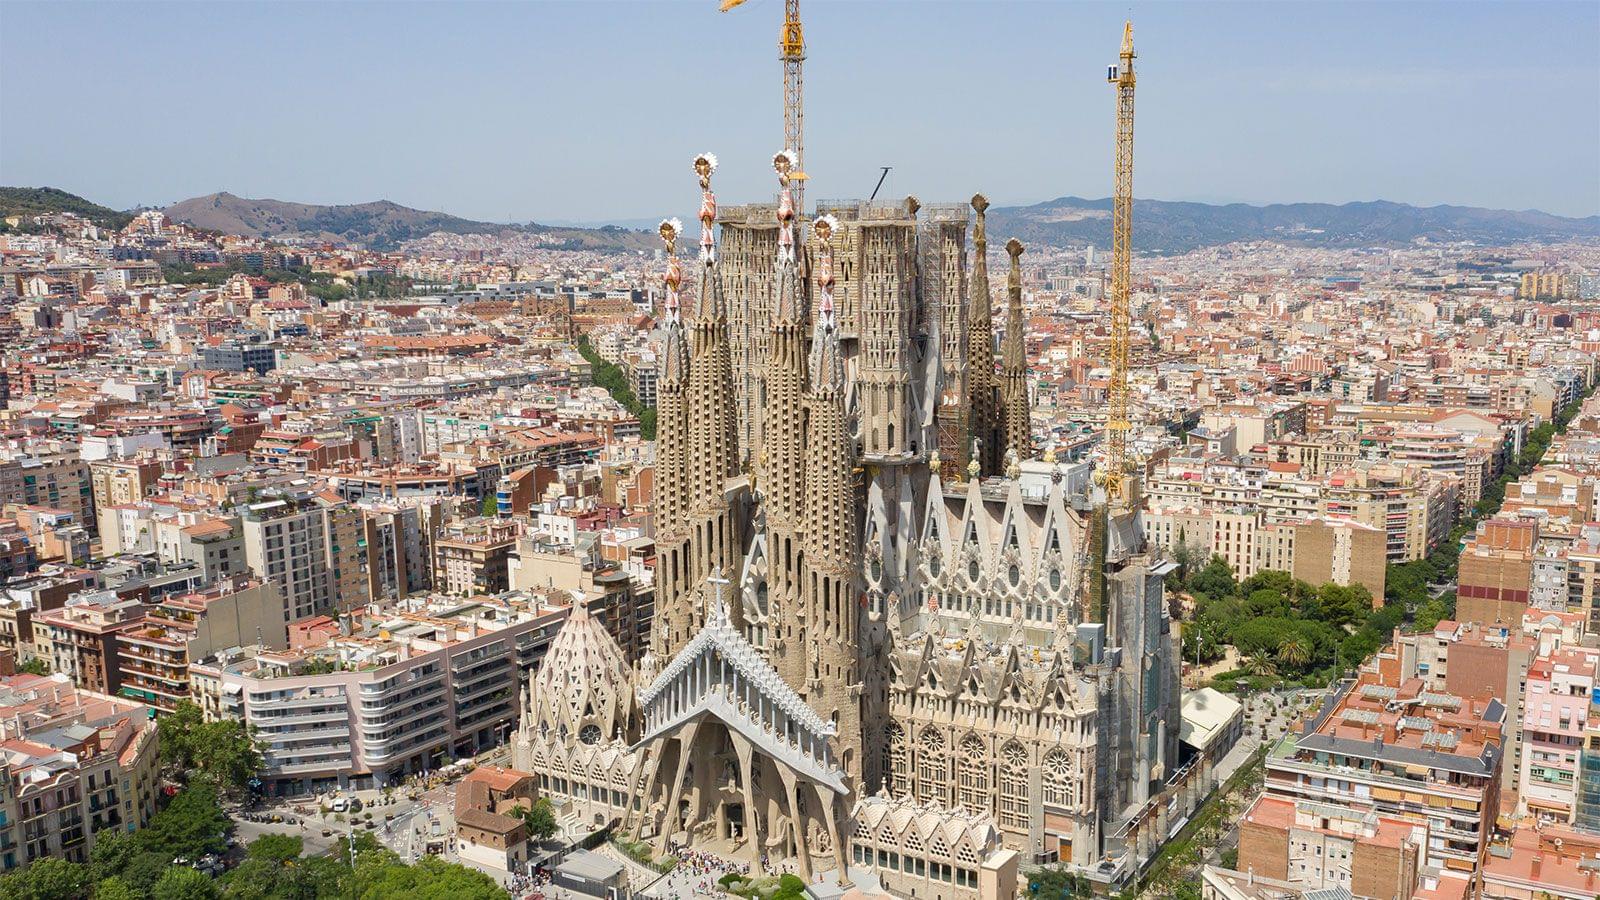 Sagrada Familia Facts